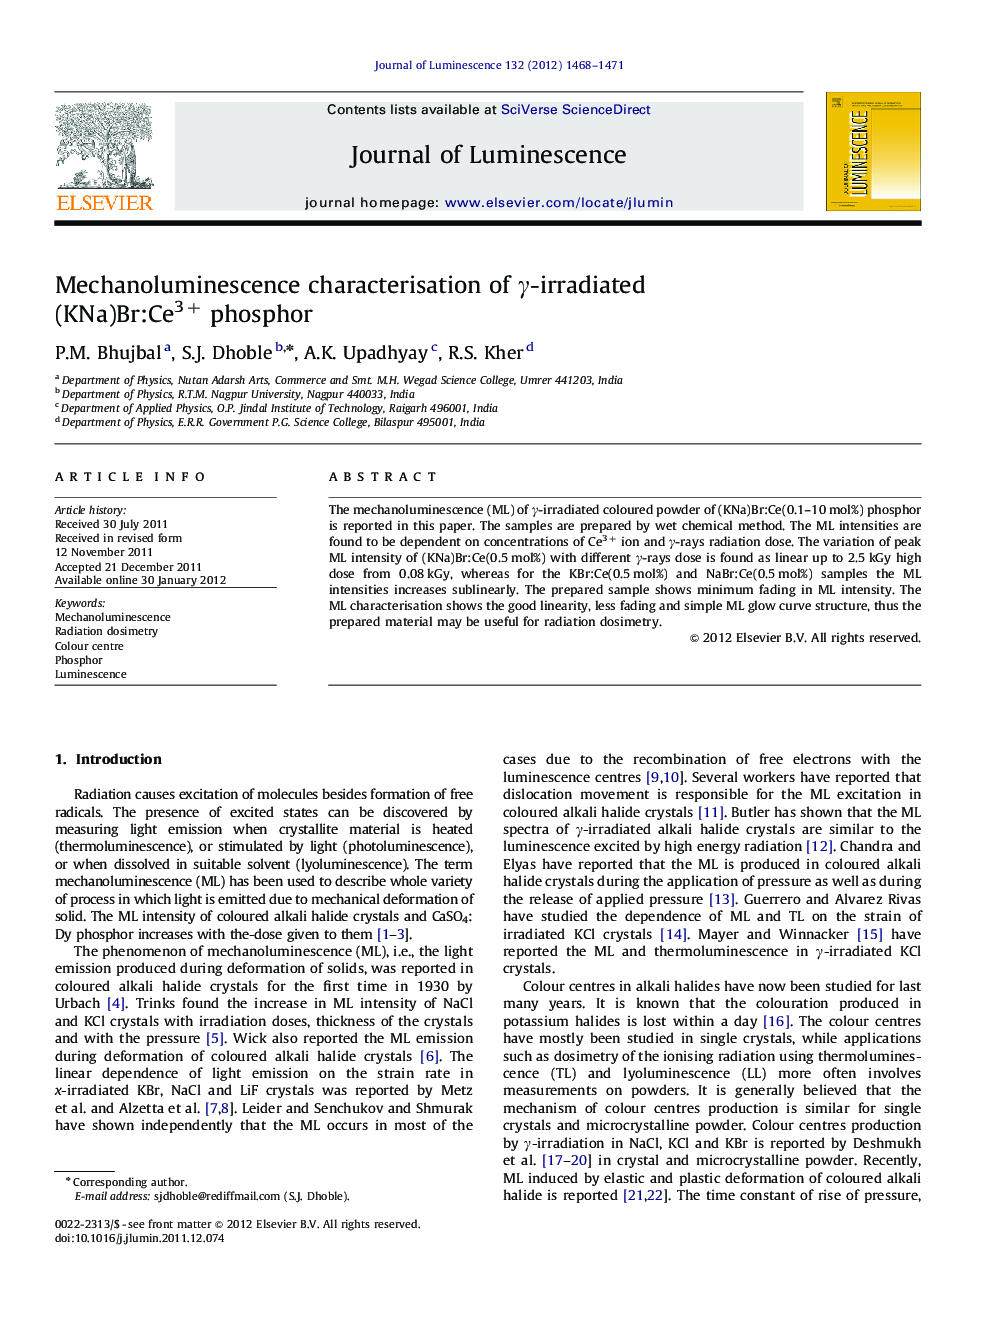 Mechanoluminescence characterisation of Î³-irradiated (KNa)Br:Ce3+ phosphor